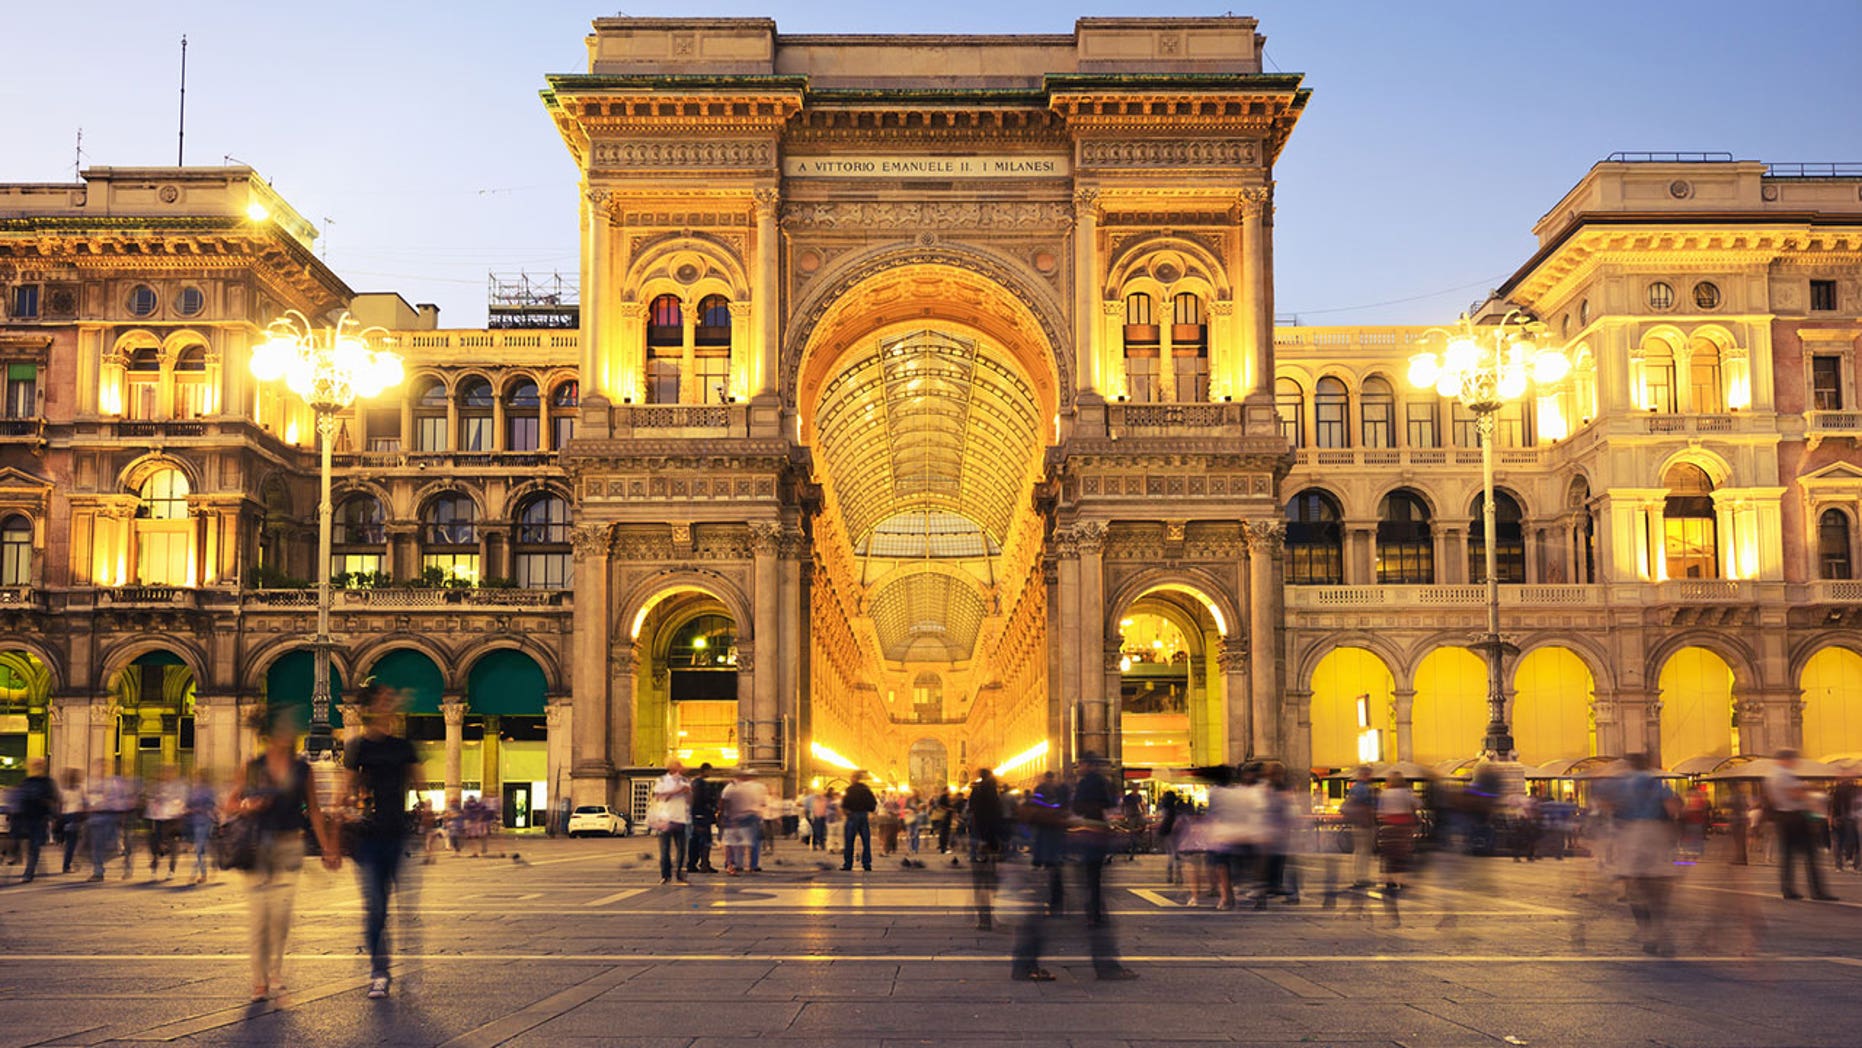 Galeria Vittorio Emanuele II en Milán, Italia